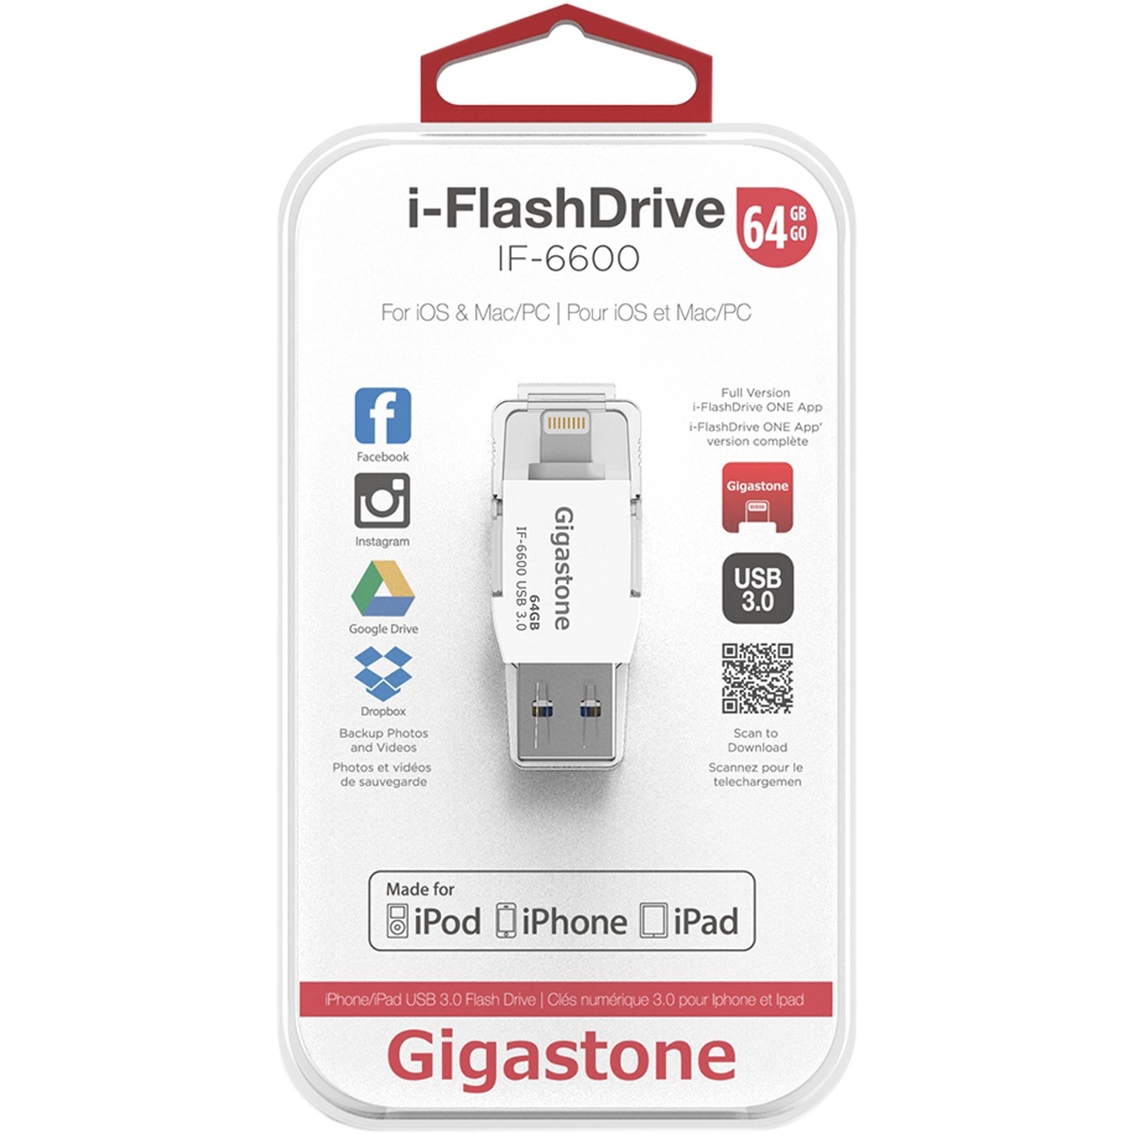 Gigastone 64GB i-FlashDrive Lightning Connector Apple iPhone/iPad USB 3.0 - Image 3 of 3